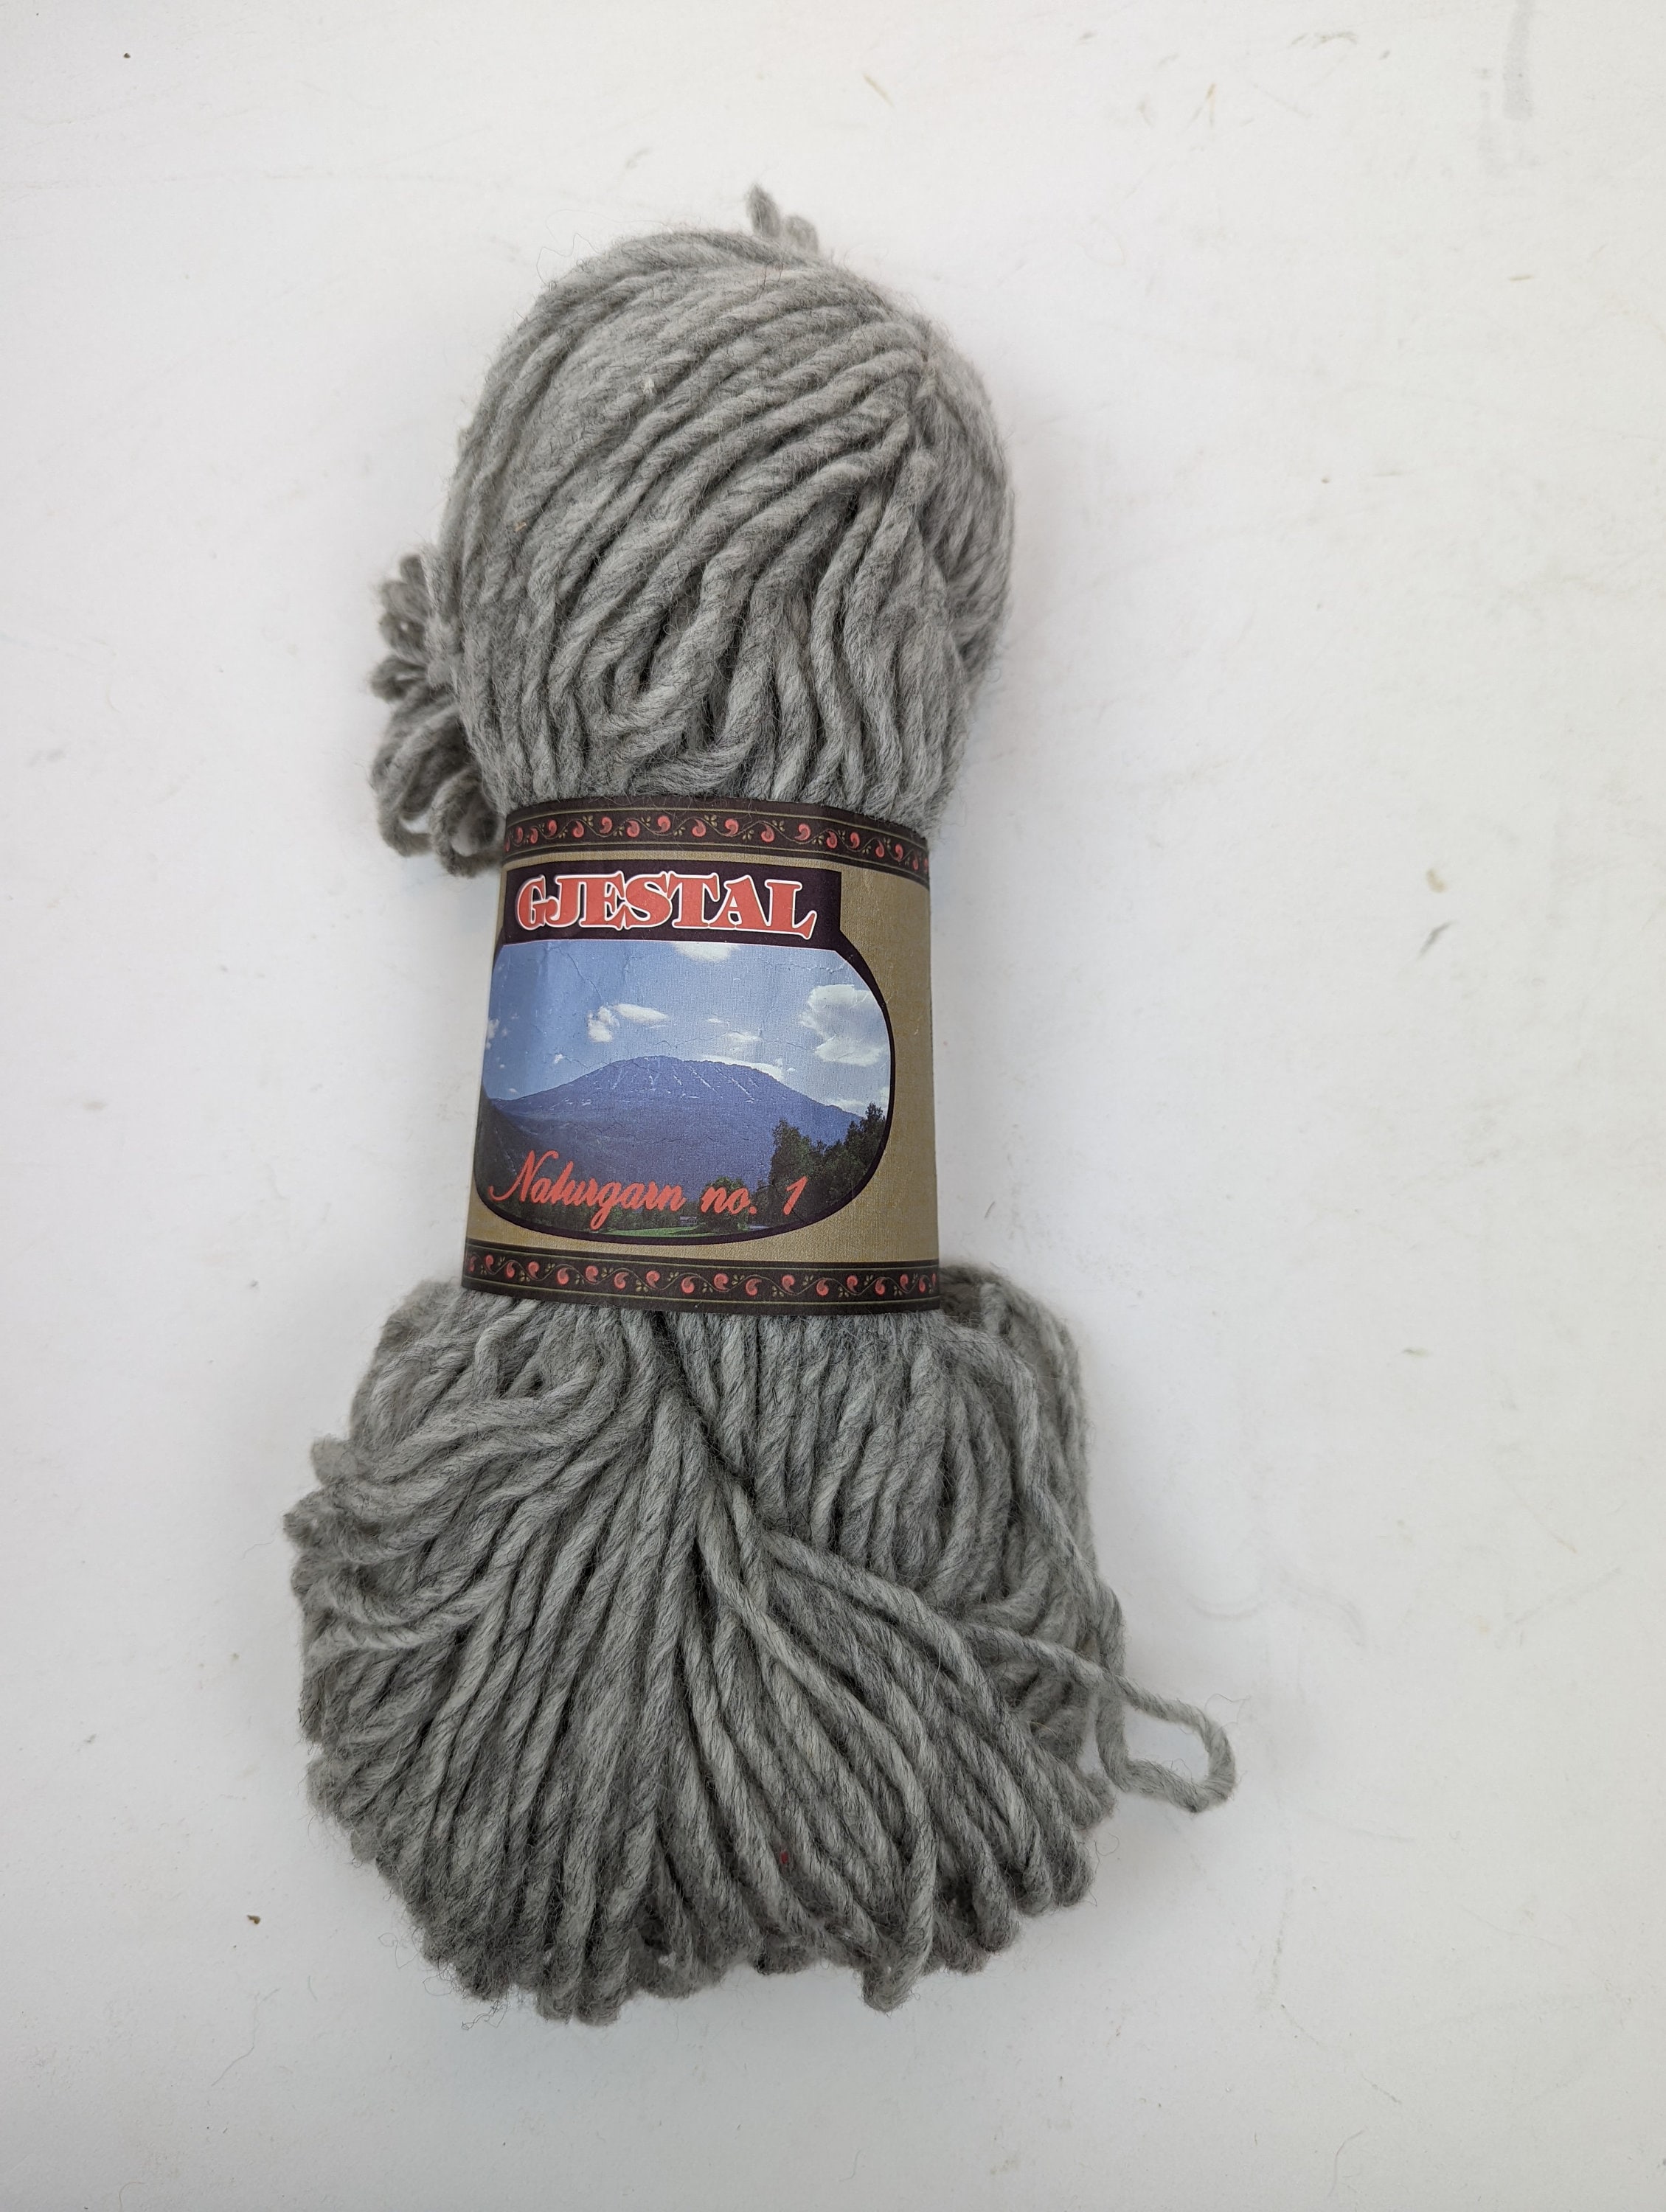 Gjestal Spinneri Nalurgarn No 1 Made in Norway Pure New Wool - Etsy